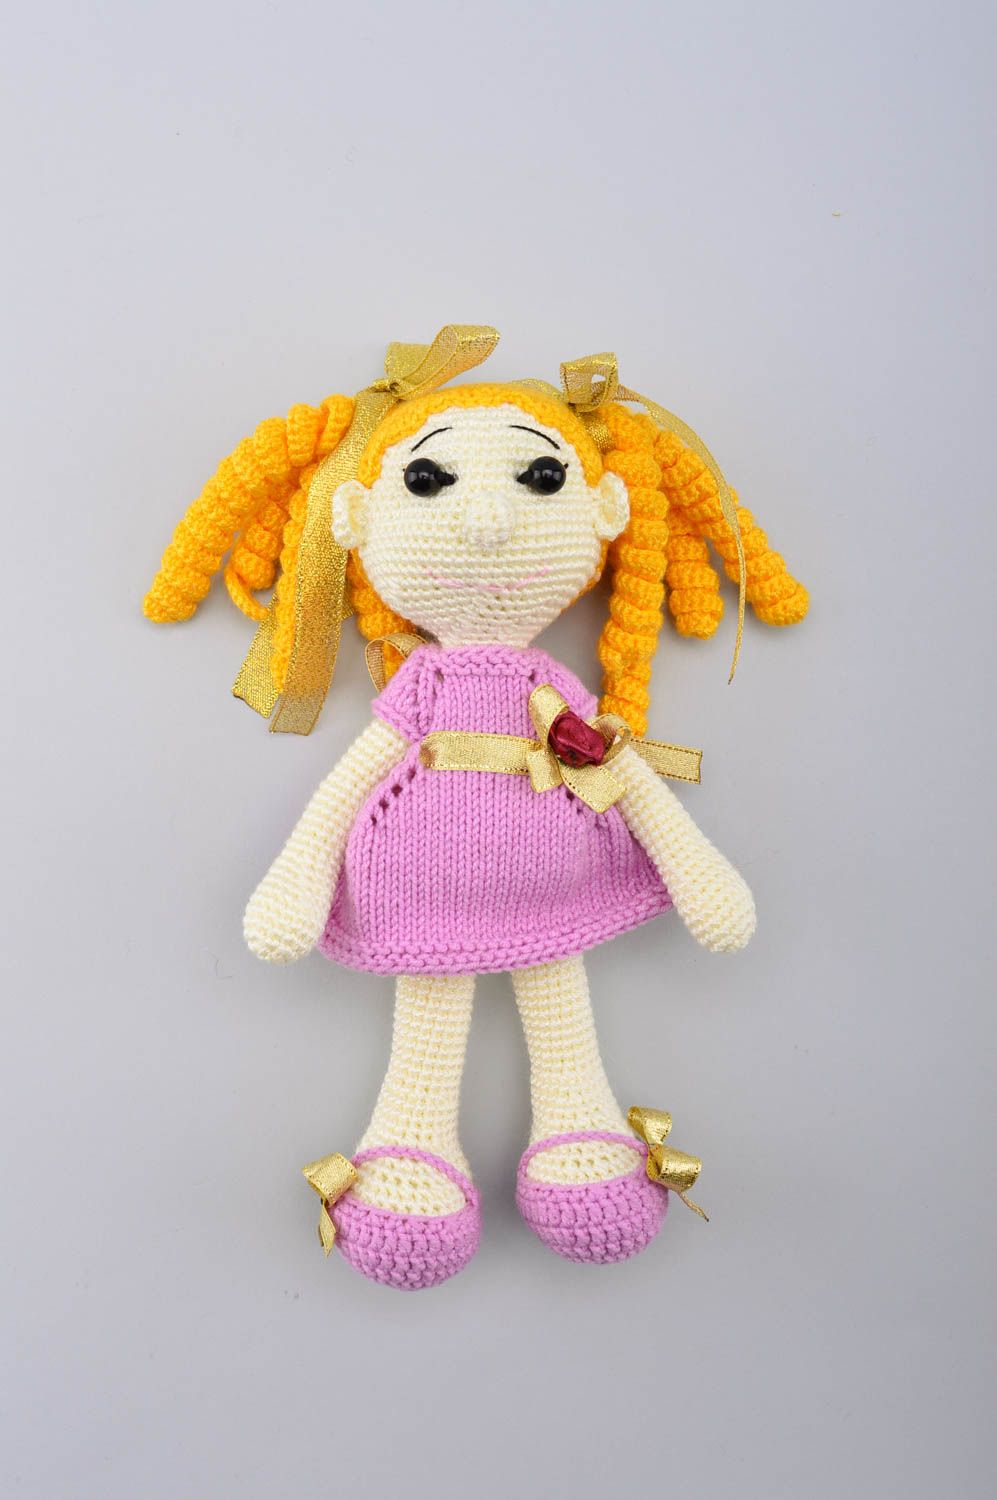 Handmade crochet doll designer doll unusual gift for baby nursery decor photo 2